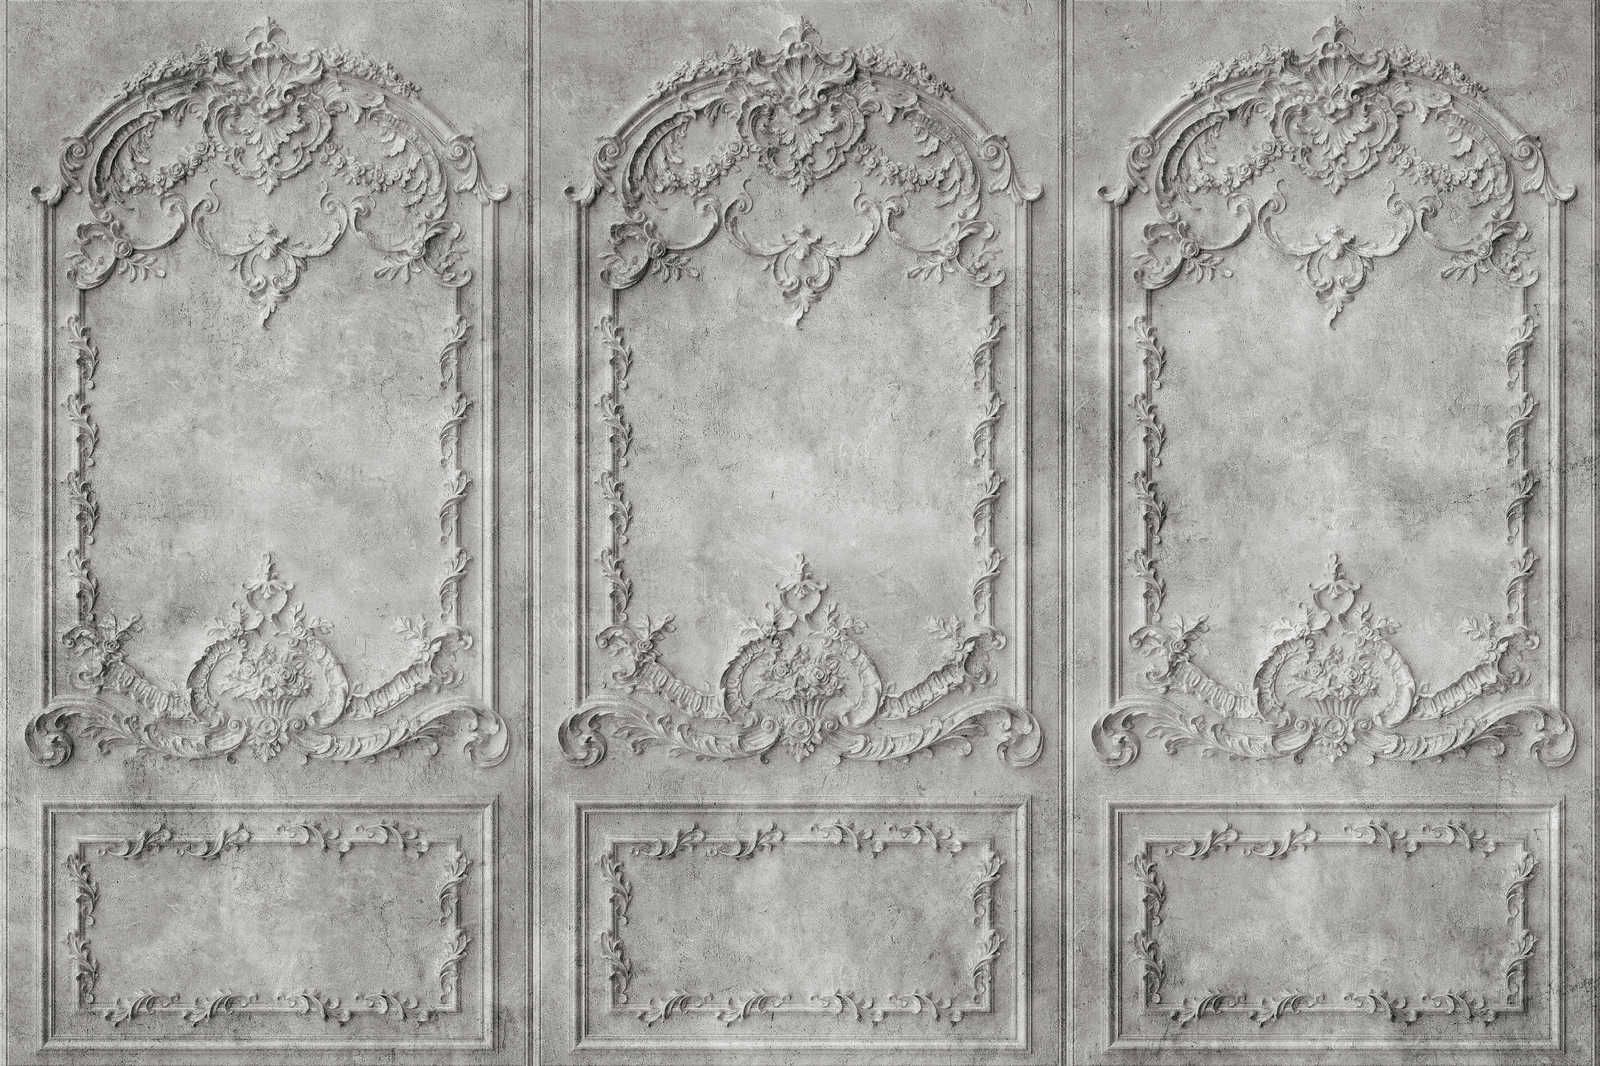             Versailles 2 - Leinwandbild Holz-Paneele Grau im Barock Stil – 1,20 m x 0,80 m
        